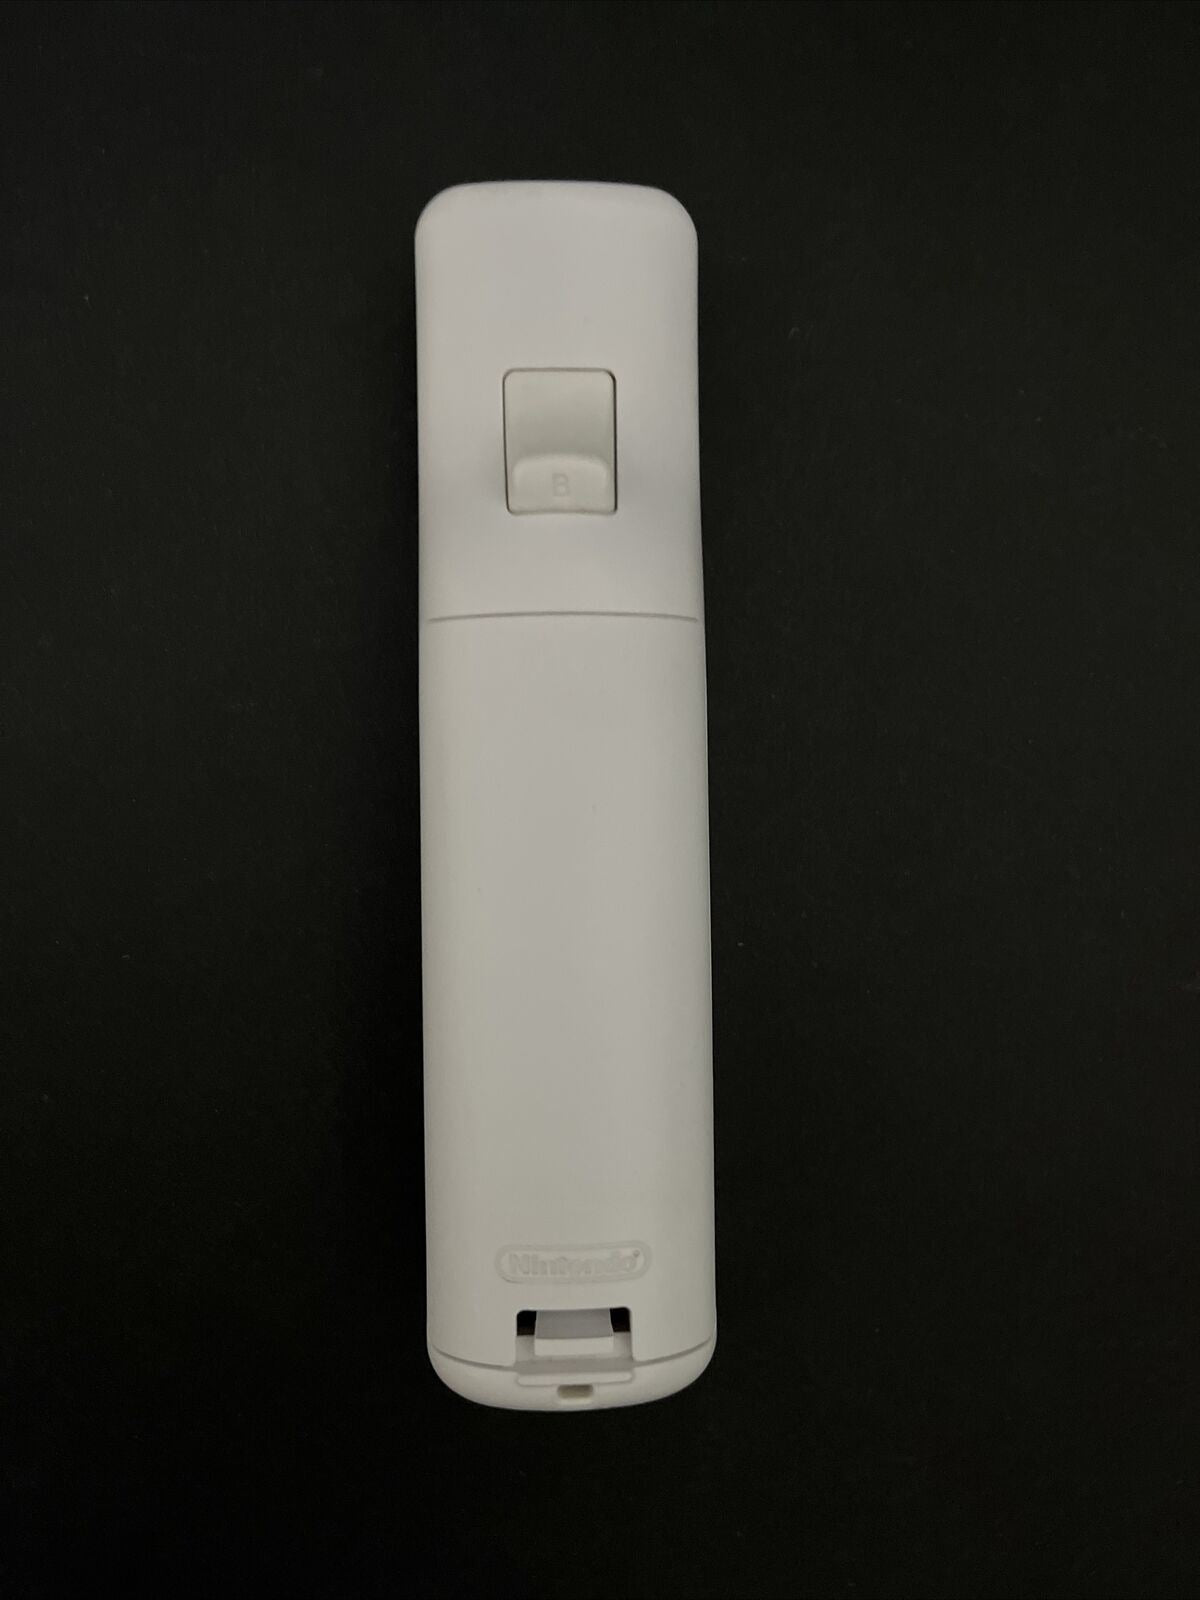 Genuine Nintendo Wii Remote Control Wiimote - 100% Official Nintendo product